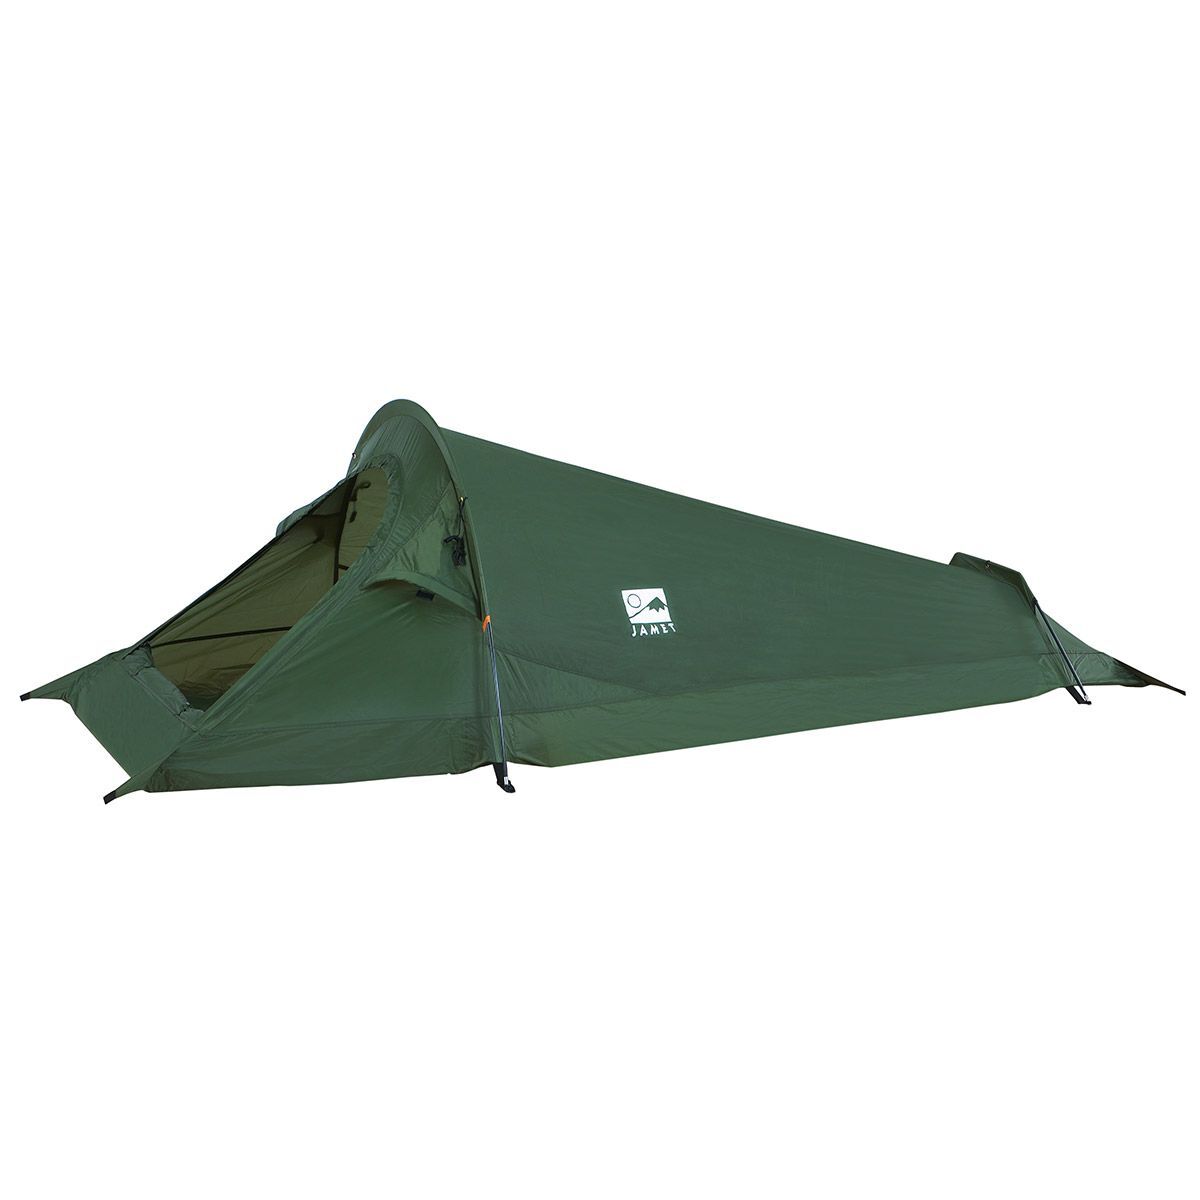 Jamet Shelter - Tenda da campeggio